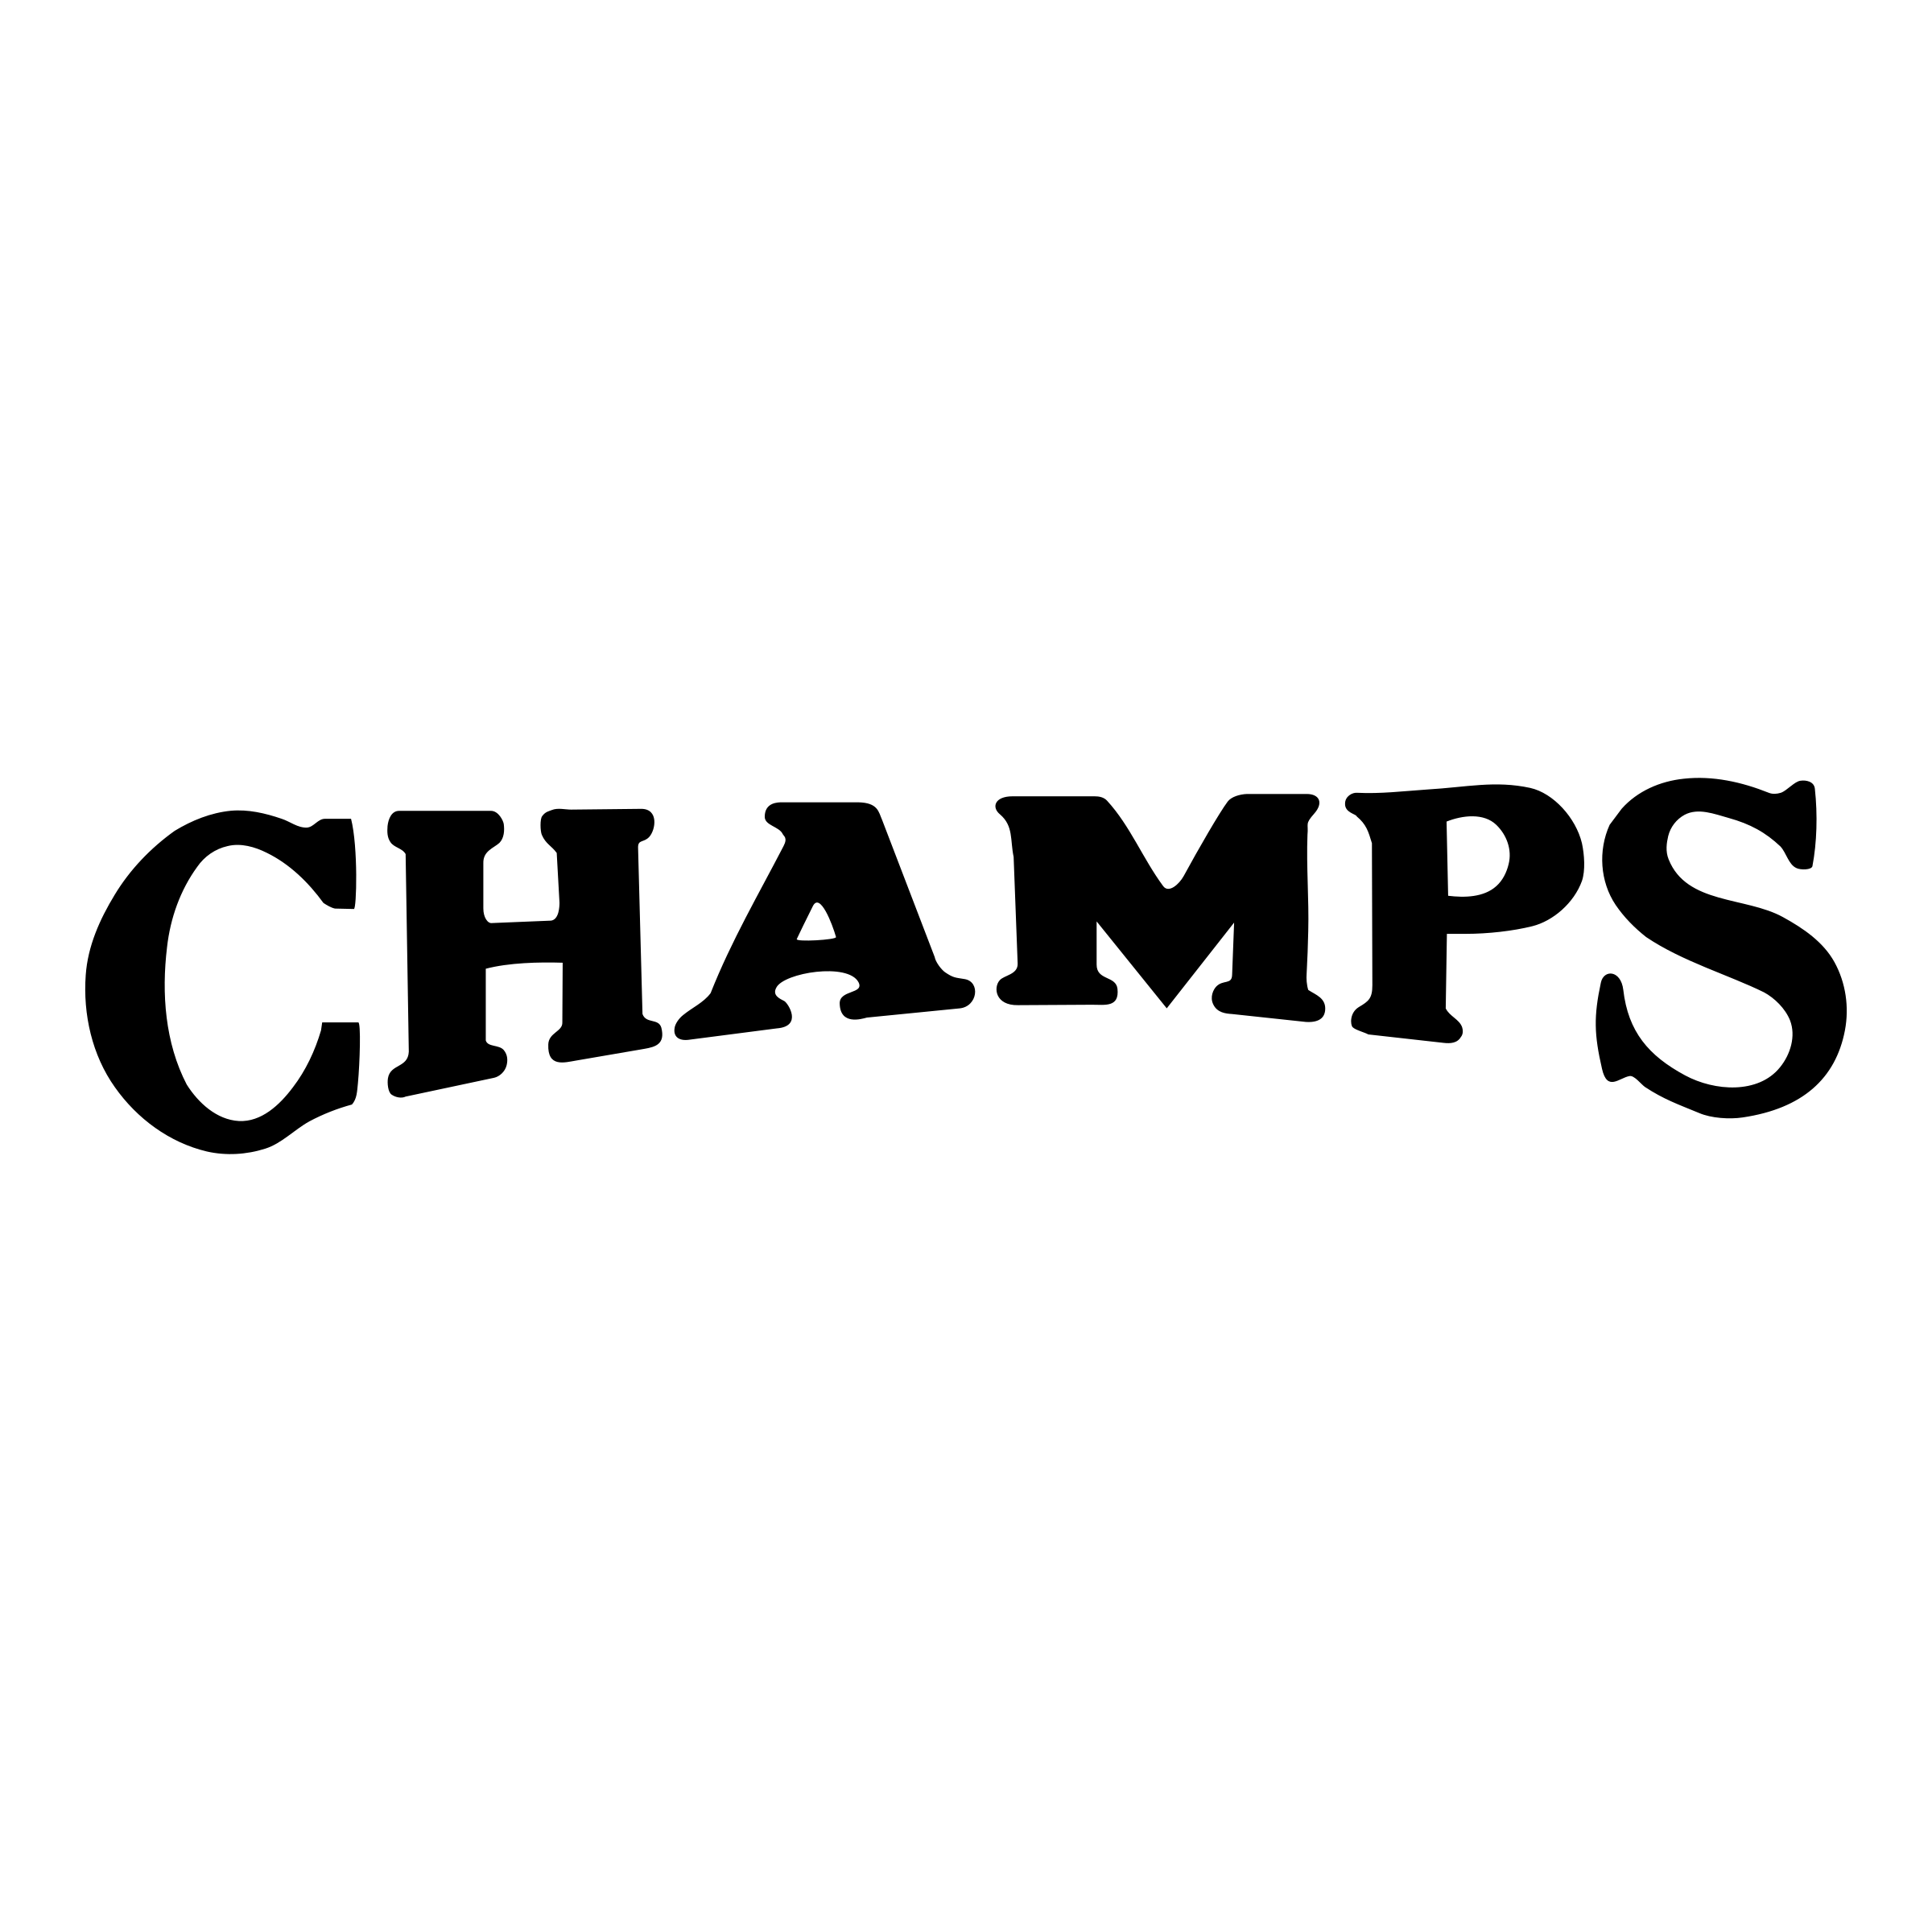 Champs Logo - Champs Logo PNG Transparent & SVG Vector - Freebie Supply